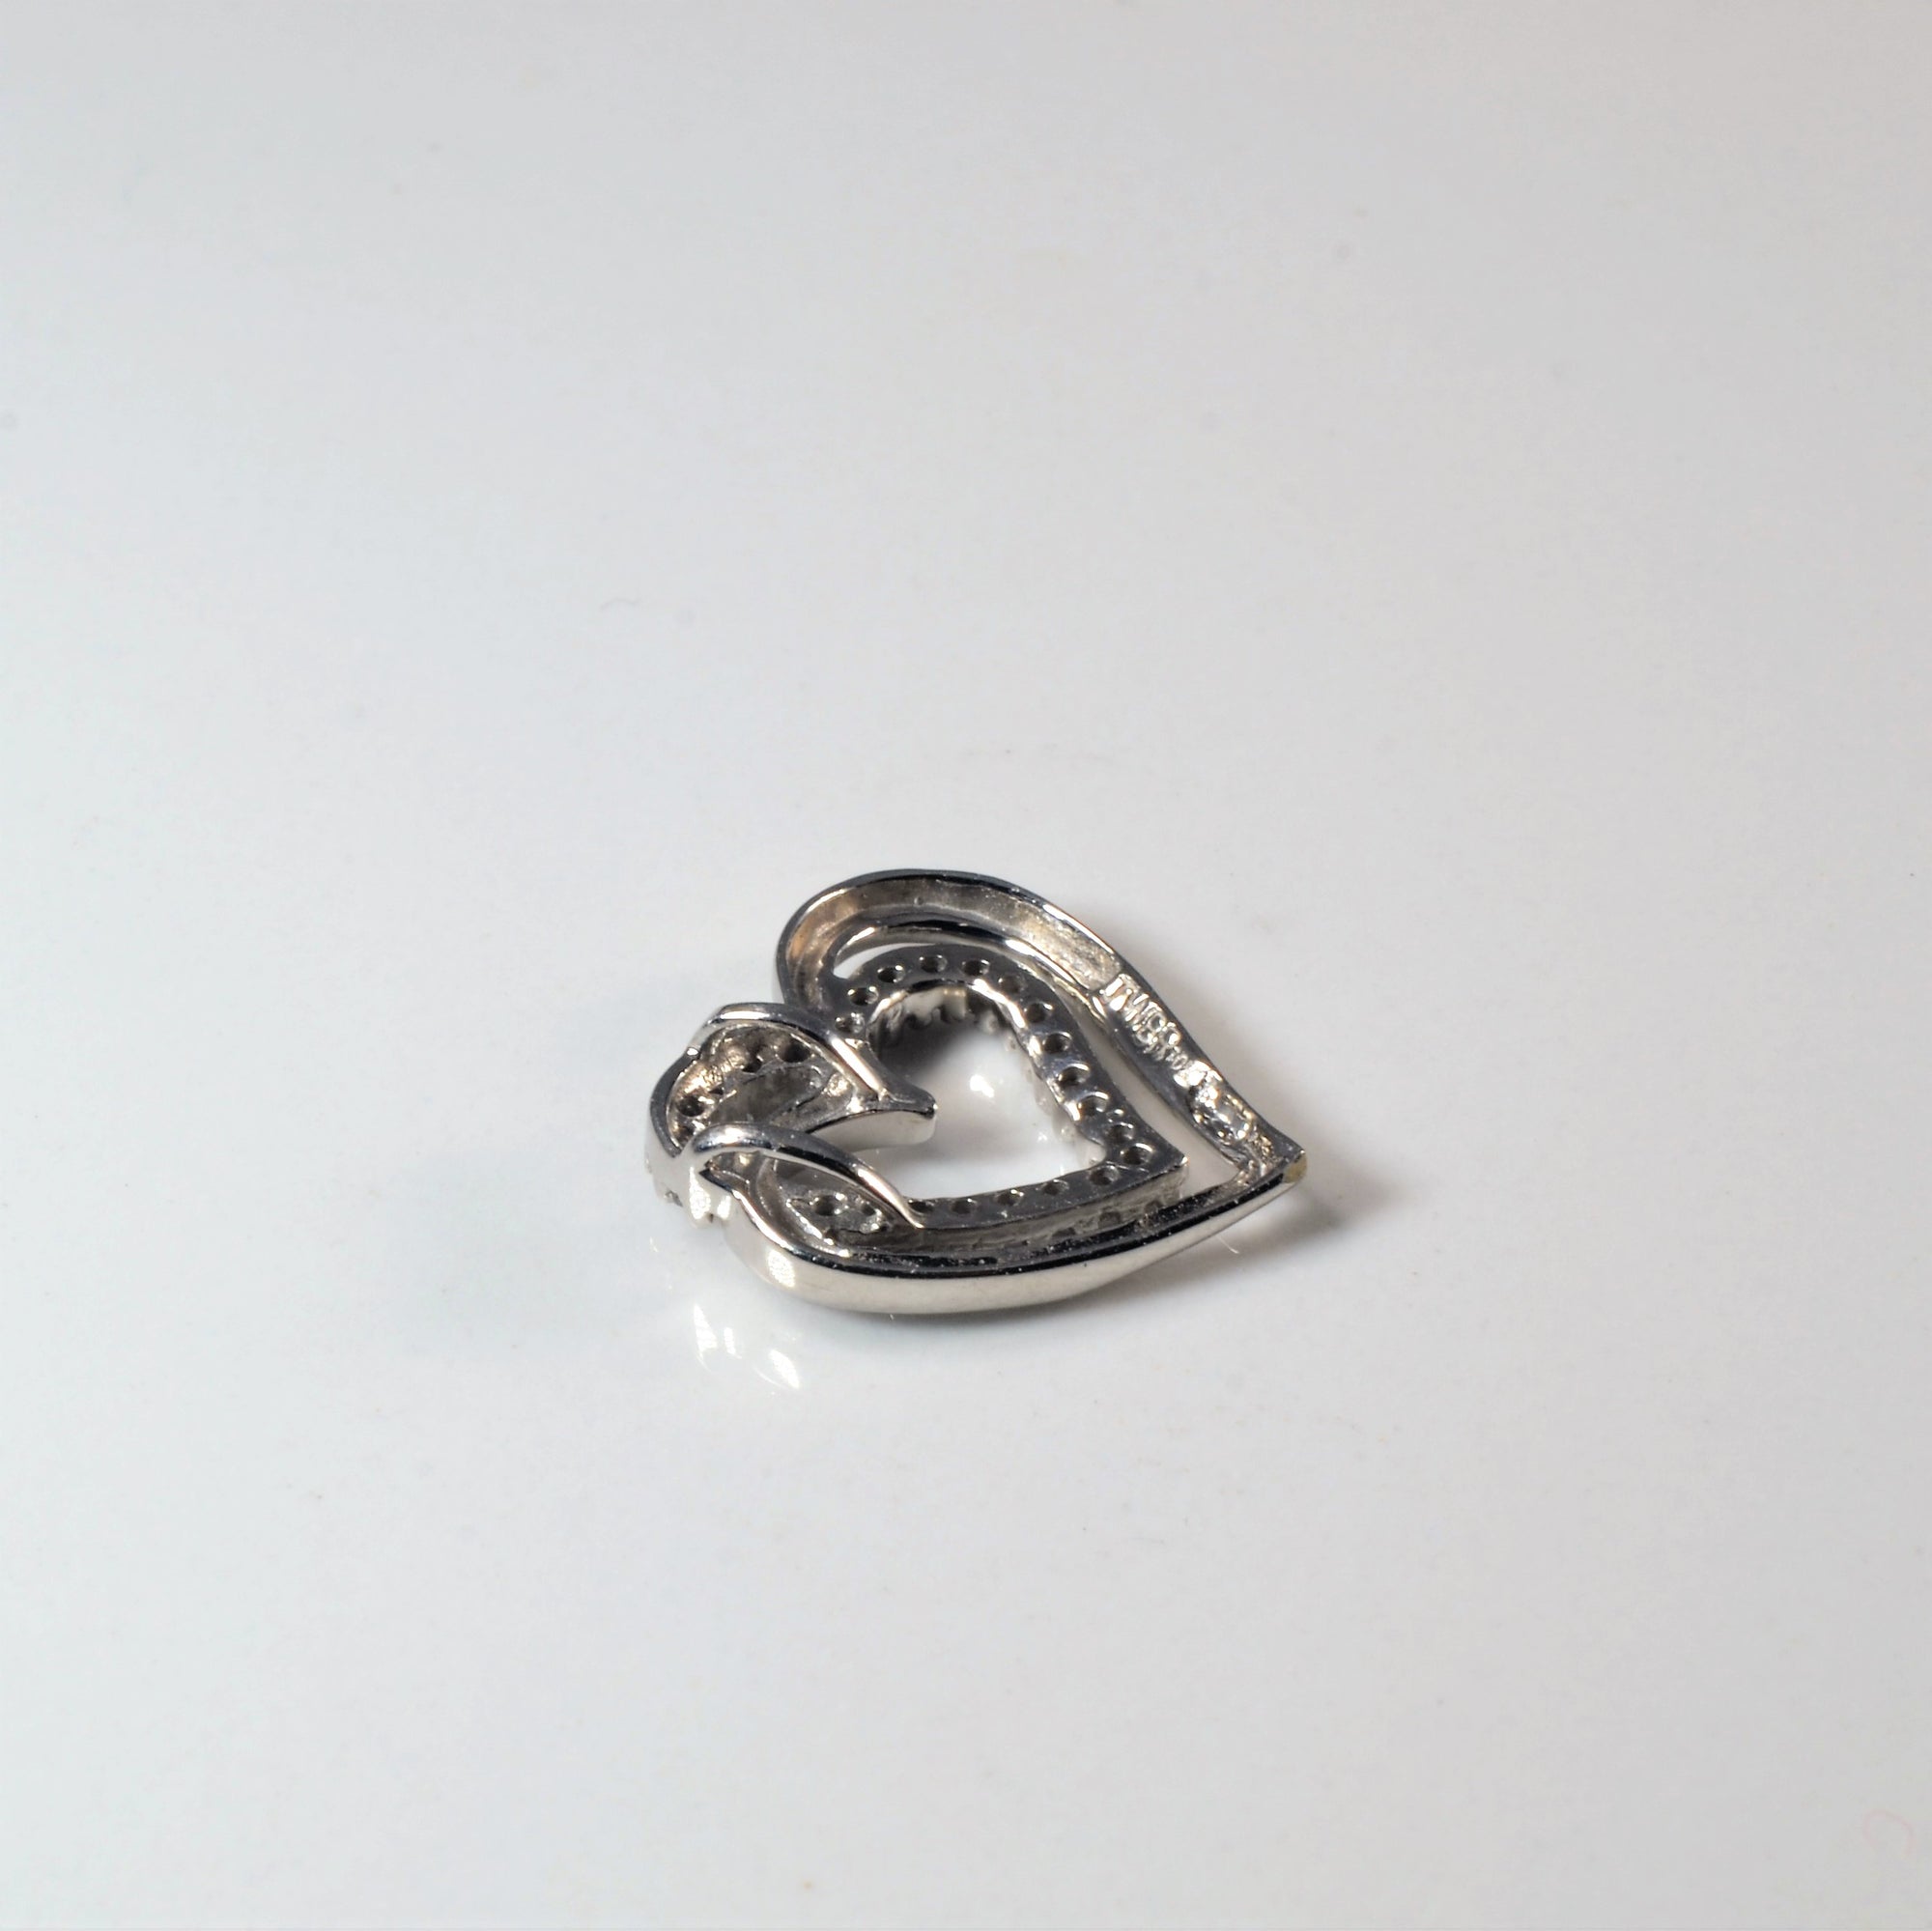 Interlocking Heart Diamond Pave Pendant | 0.13ctw |